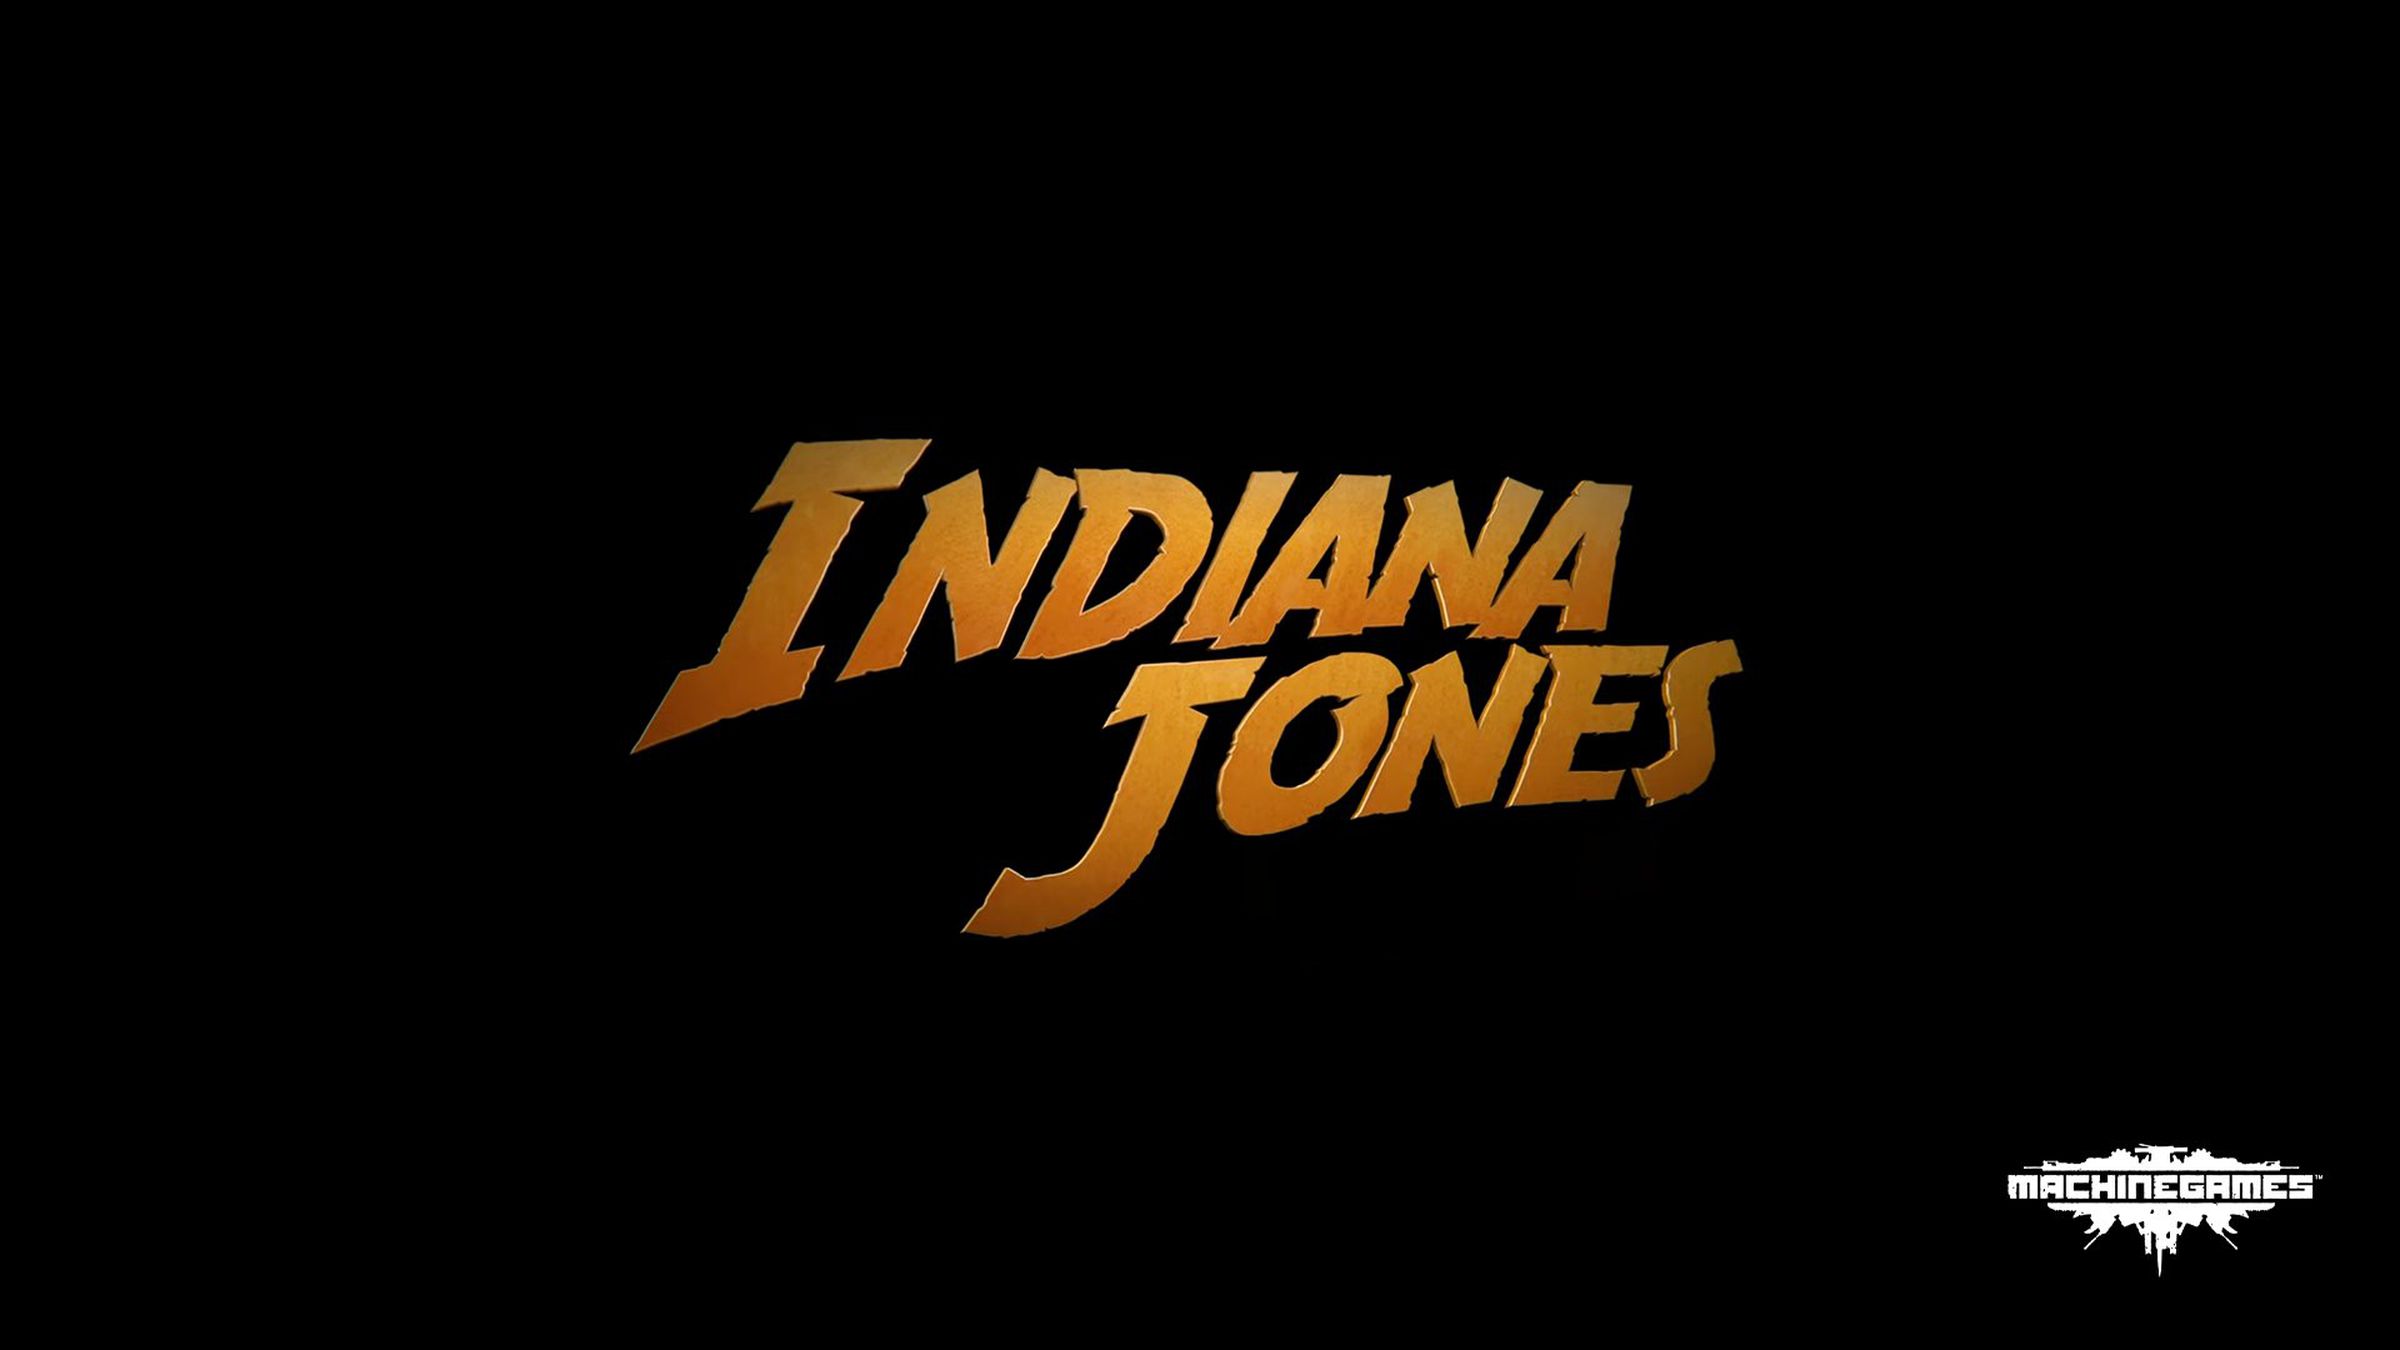 Illustration of Indiana Jones logo